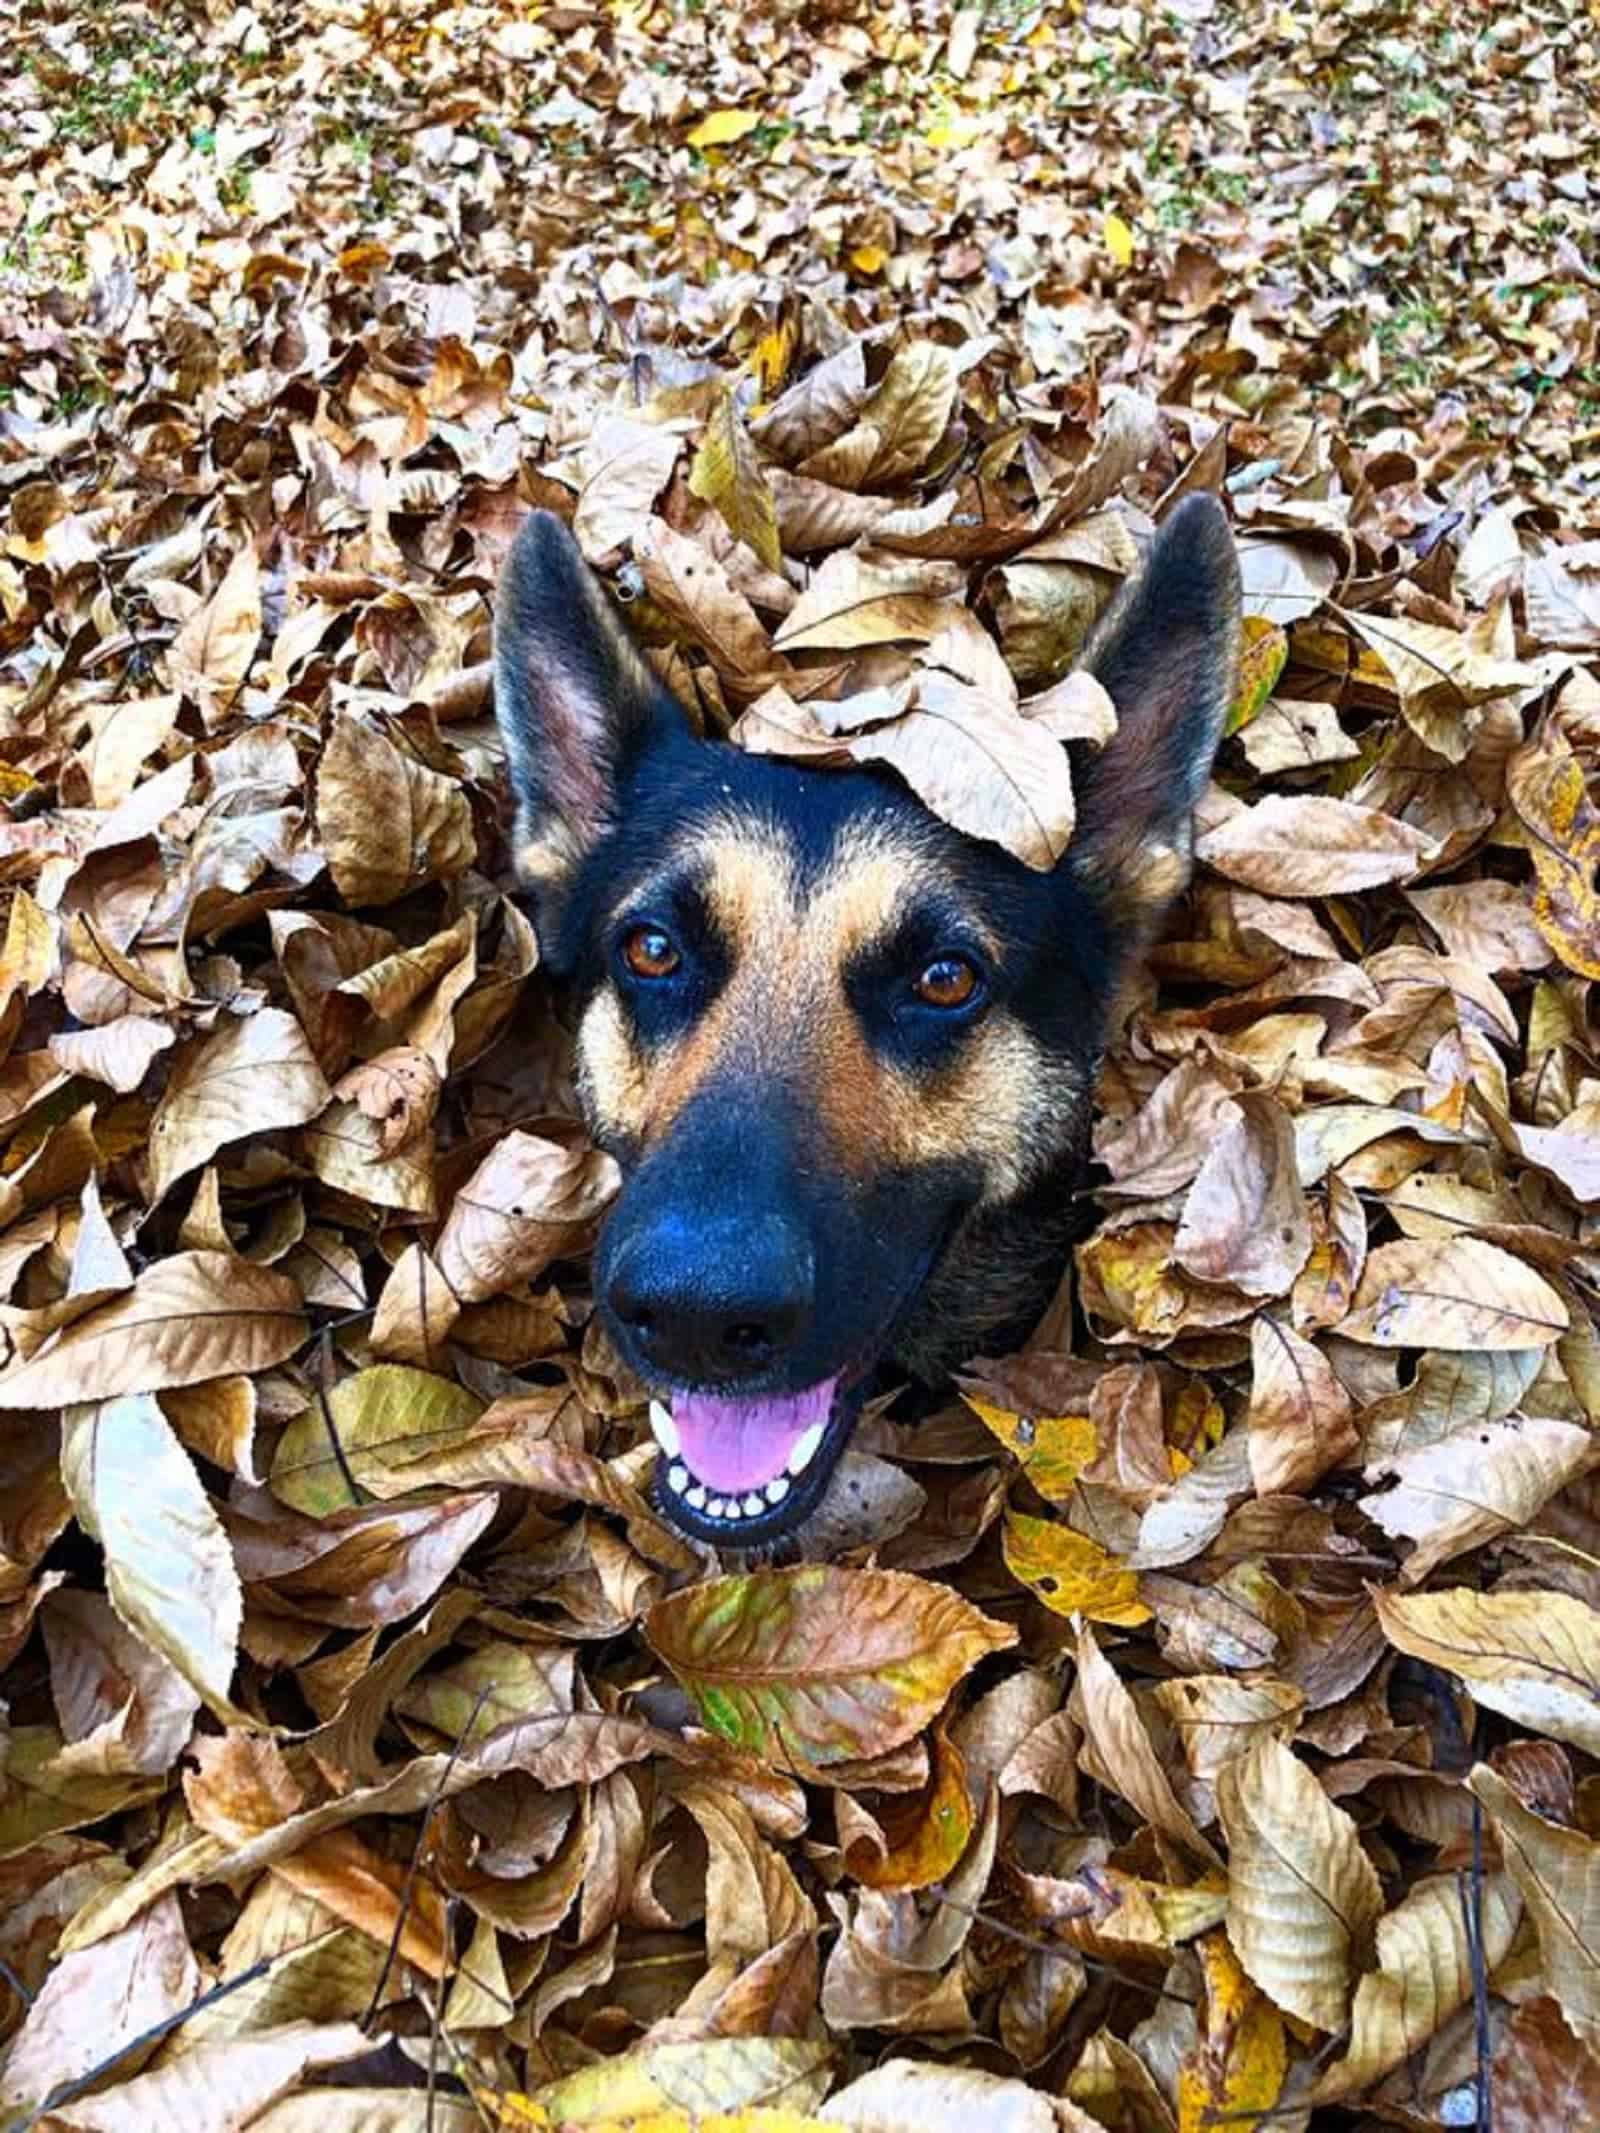 german shepherd dog hiding in fallen leaves in the park